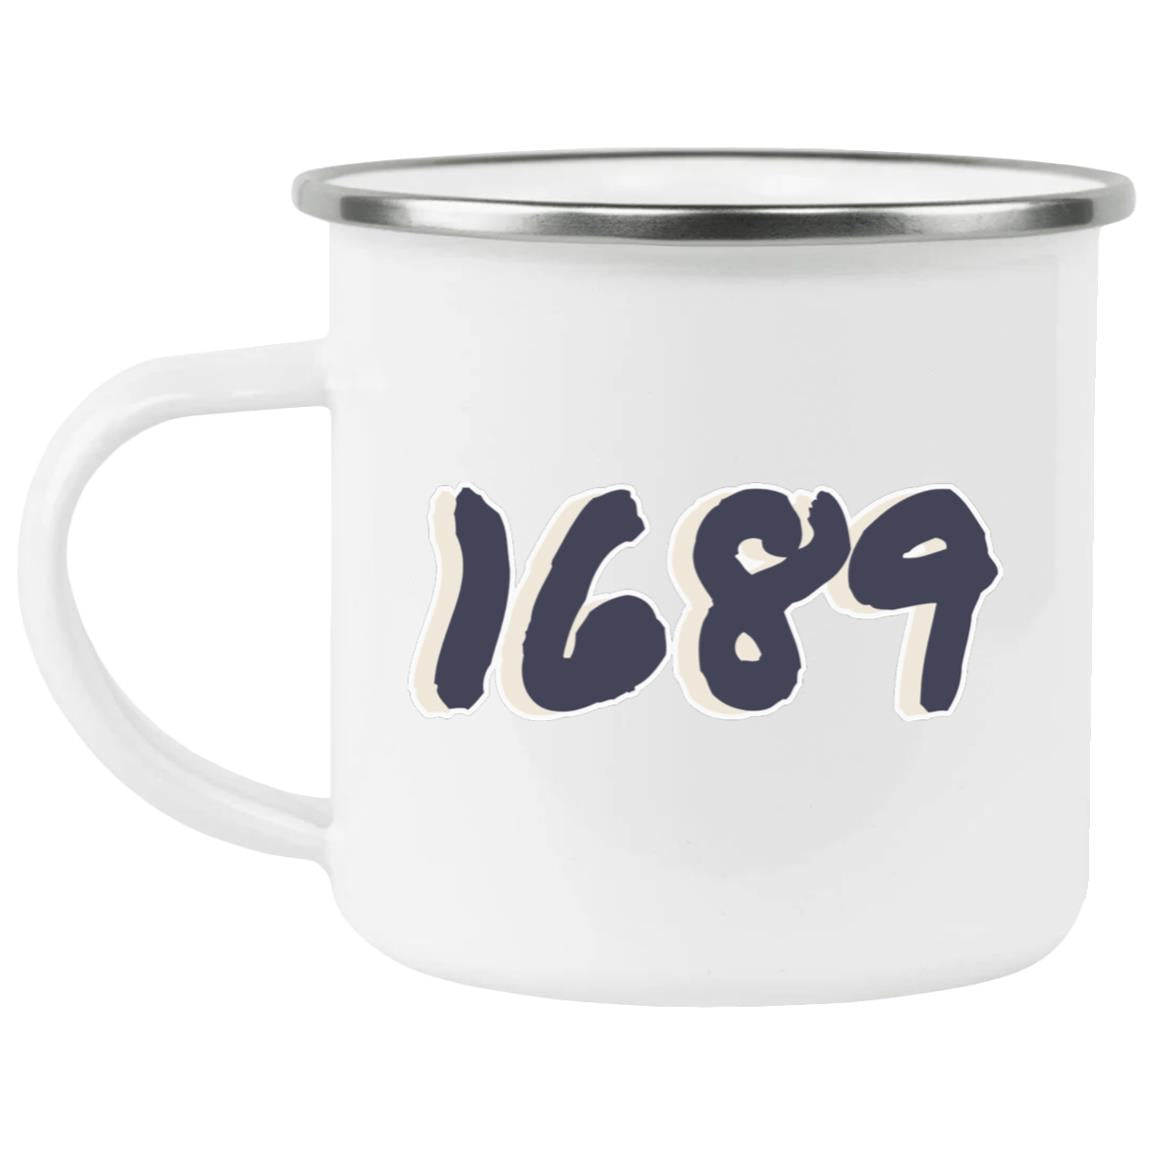 1689 (12oz Enamel Camping Mug)